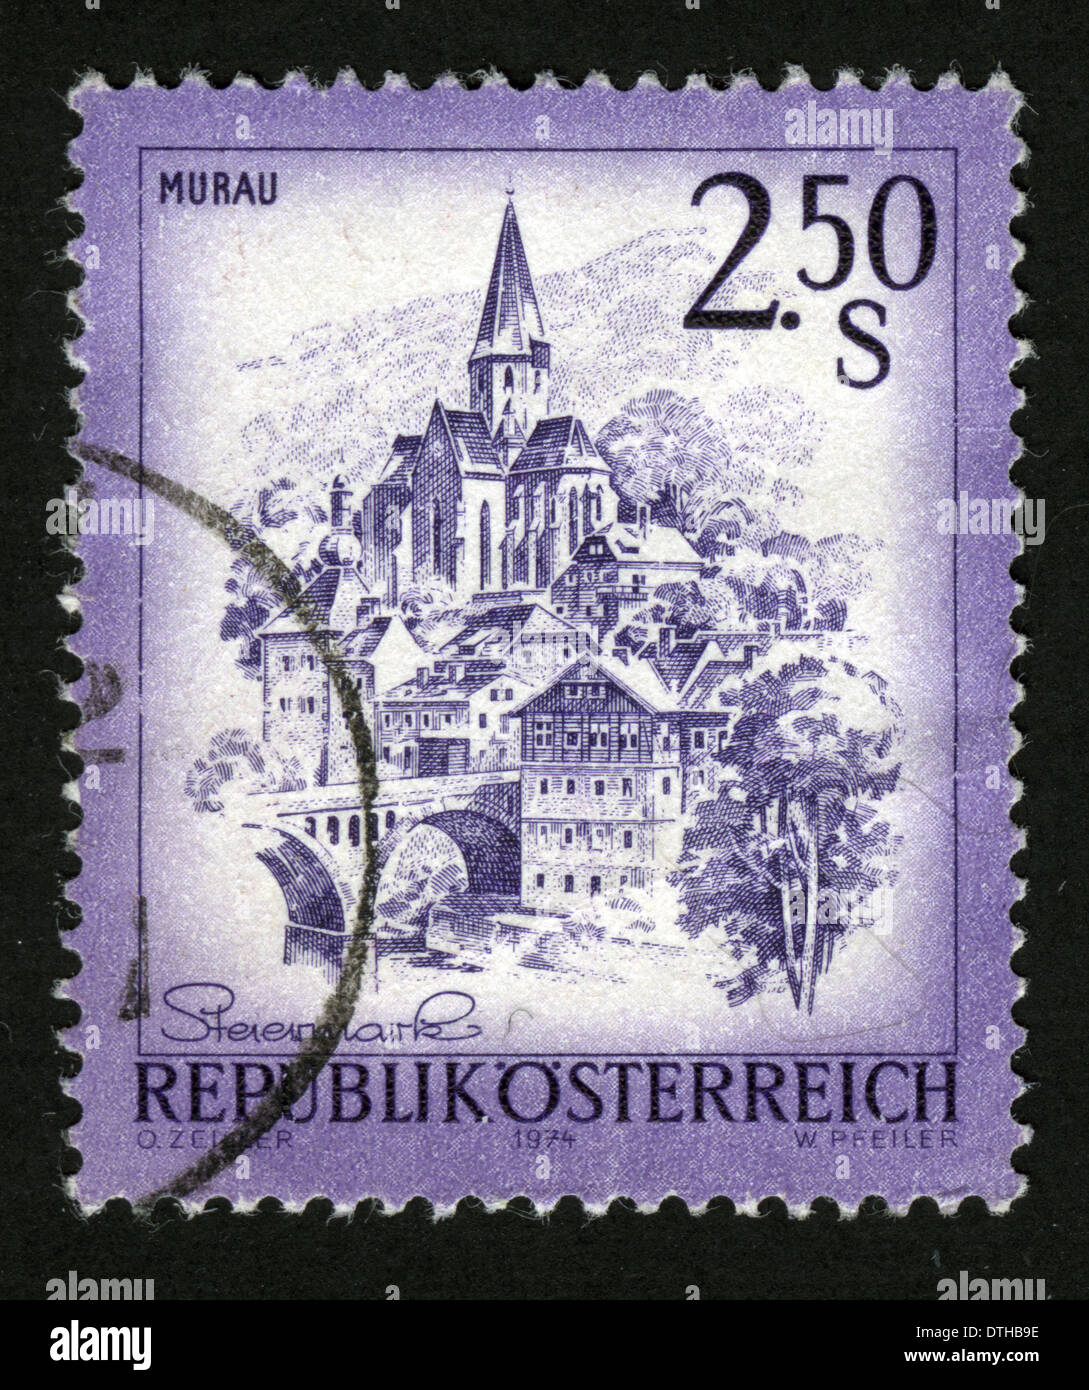 REPUBLIK, ÖSTERREICH, Austrian, Austria, postage, stamp, postal, places, Steiermark, Styria, Murau Stock Photo